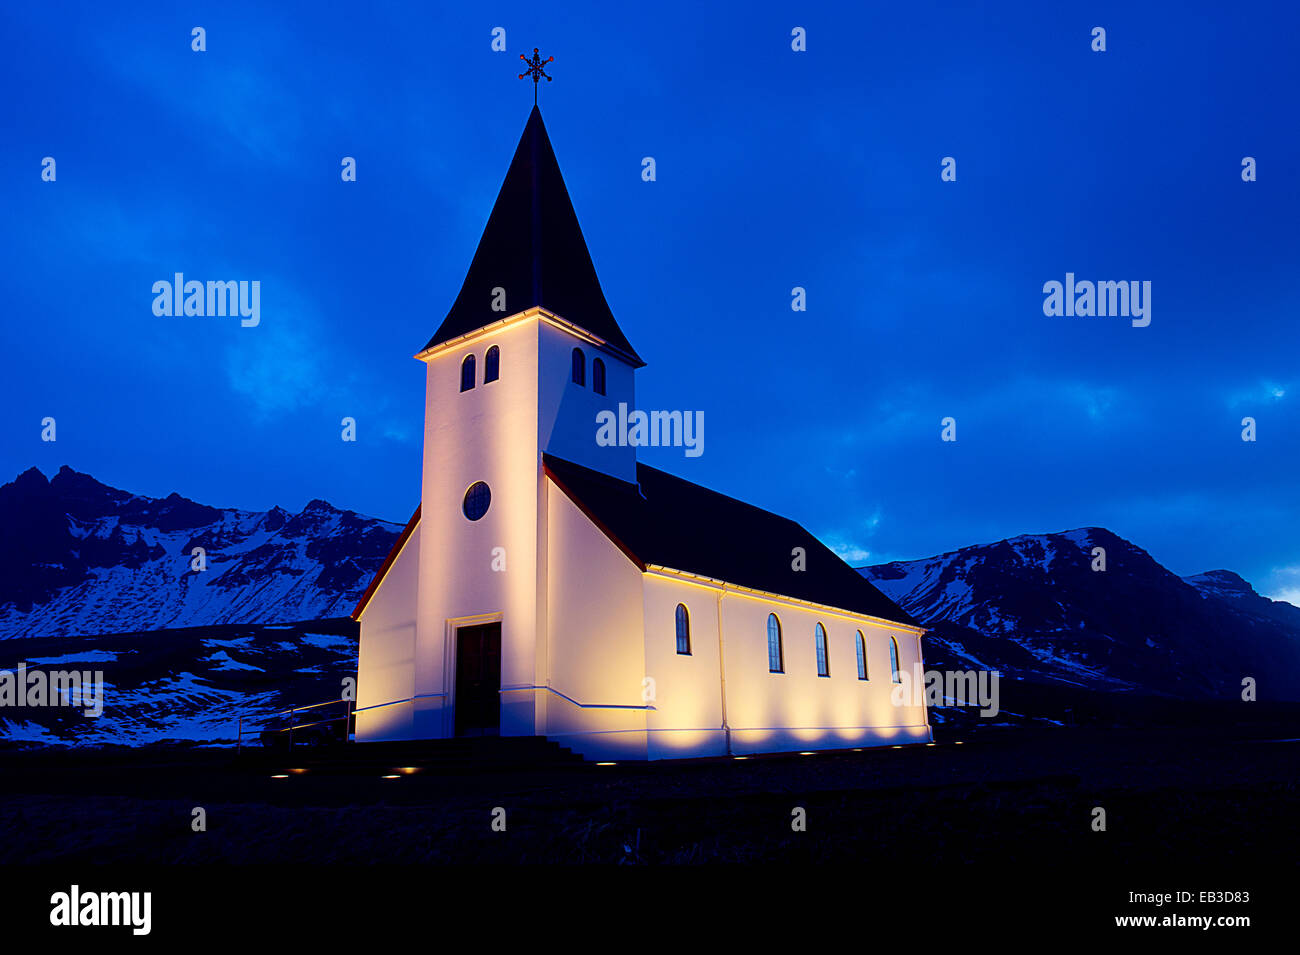 Chiesa bianca accesa vicino a montagne innevate di notte Foto Stock